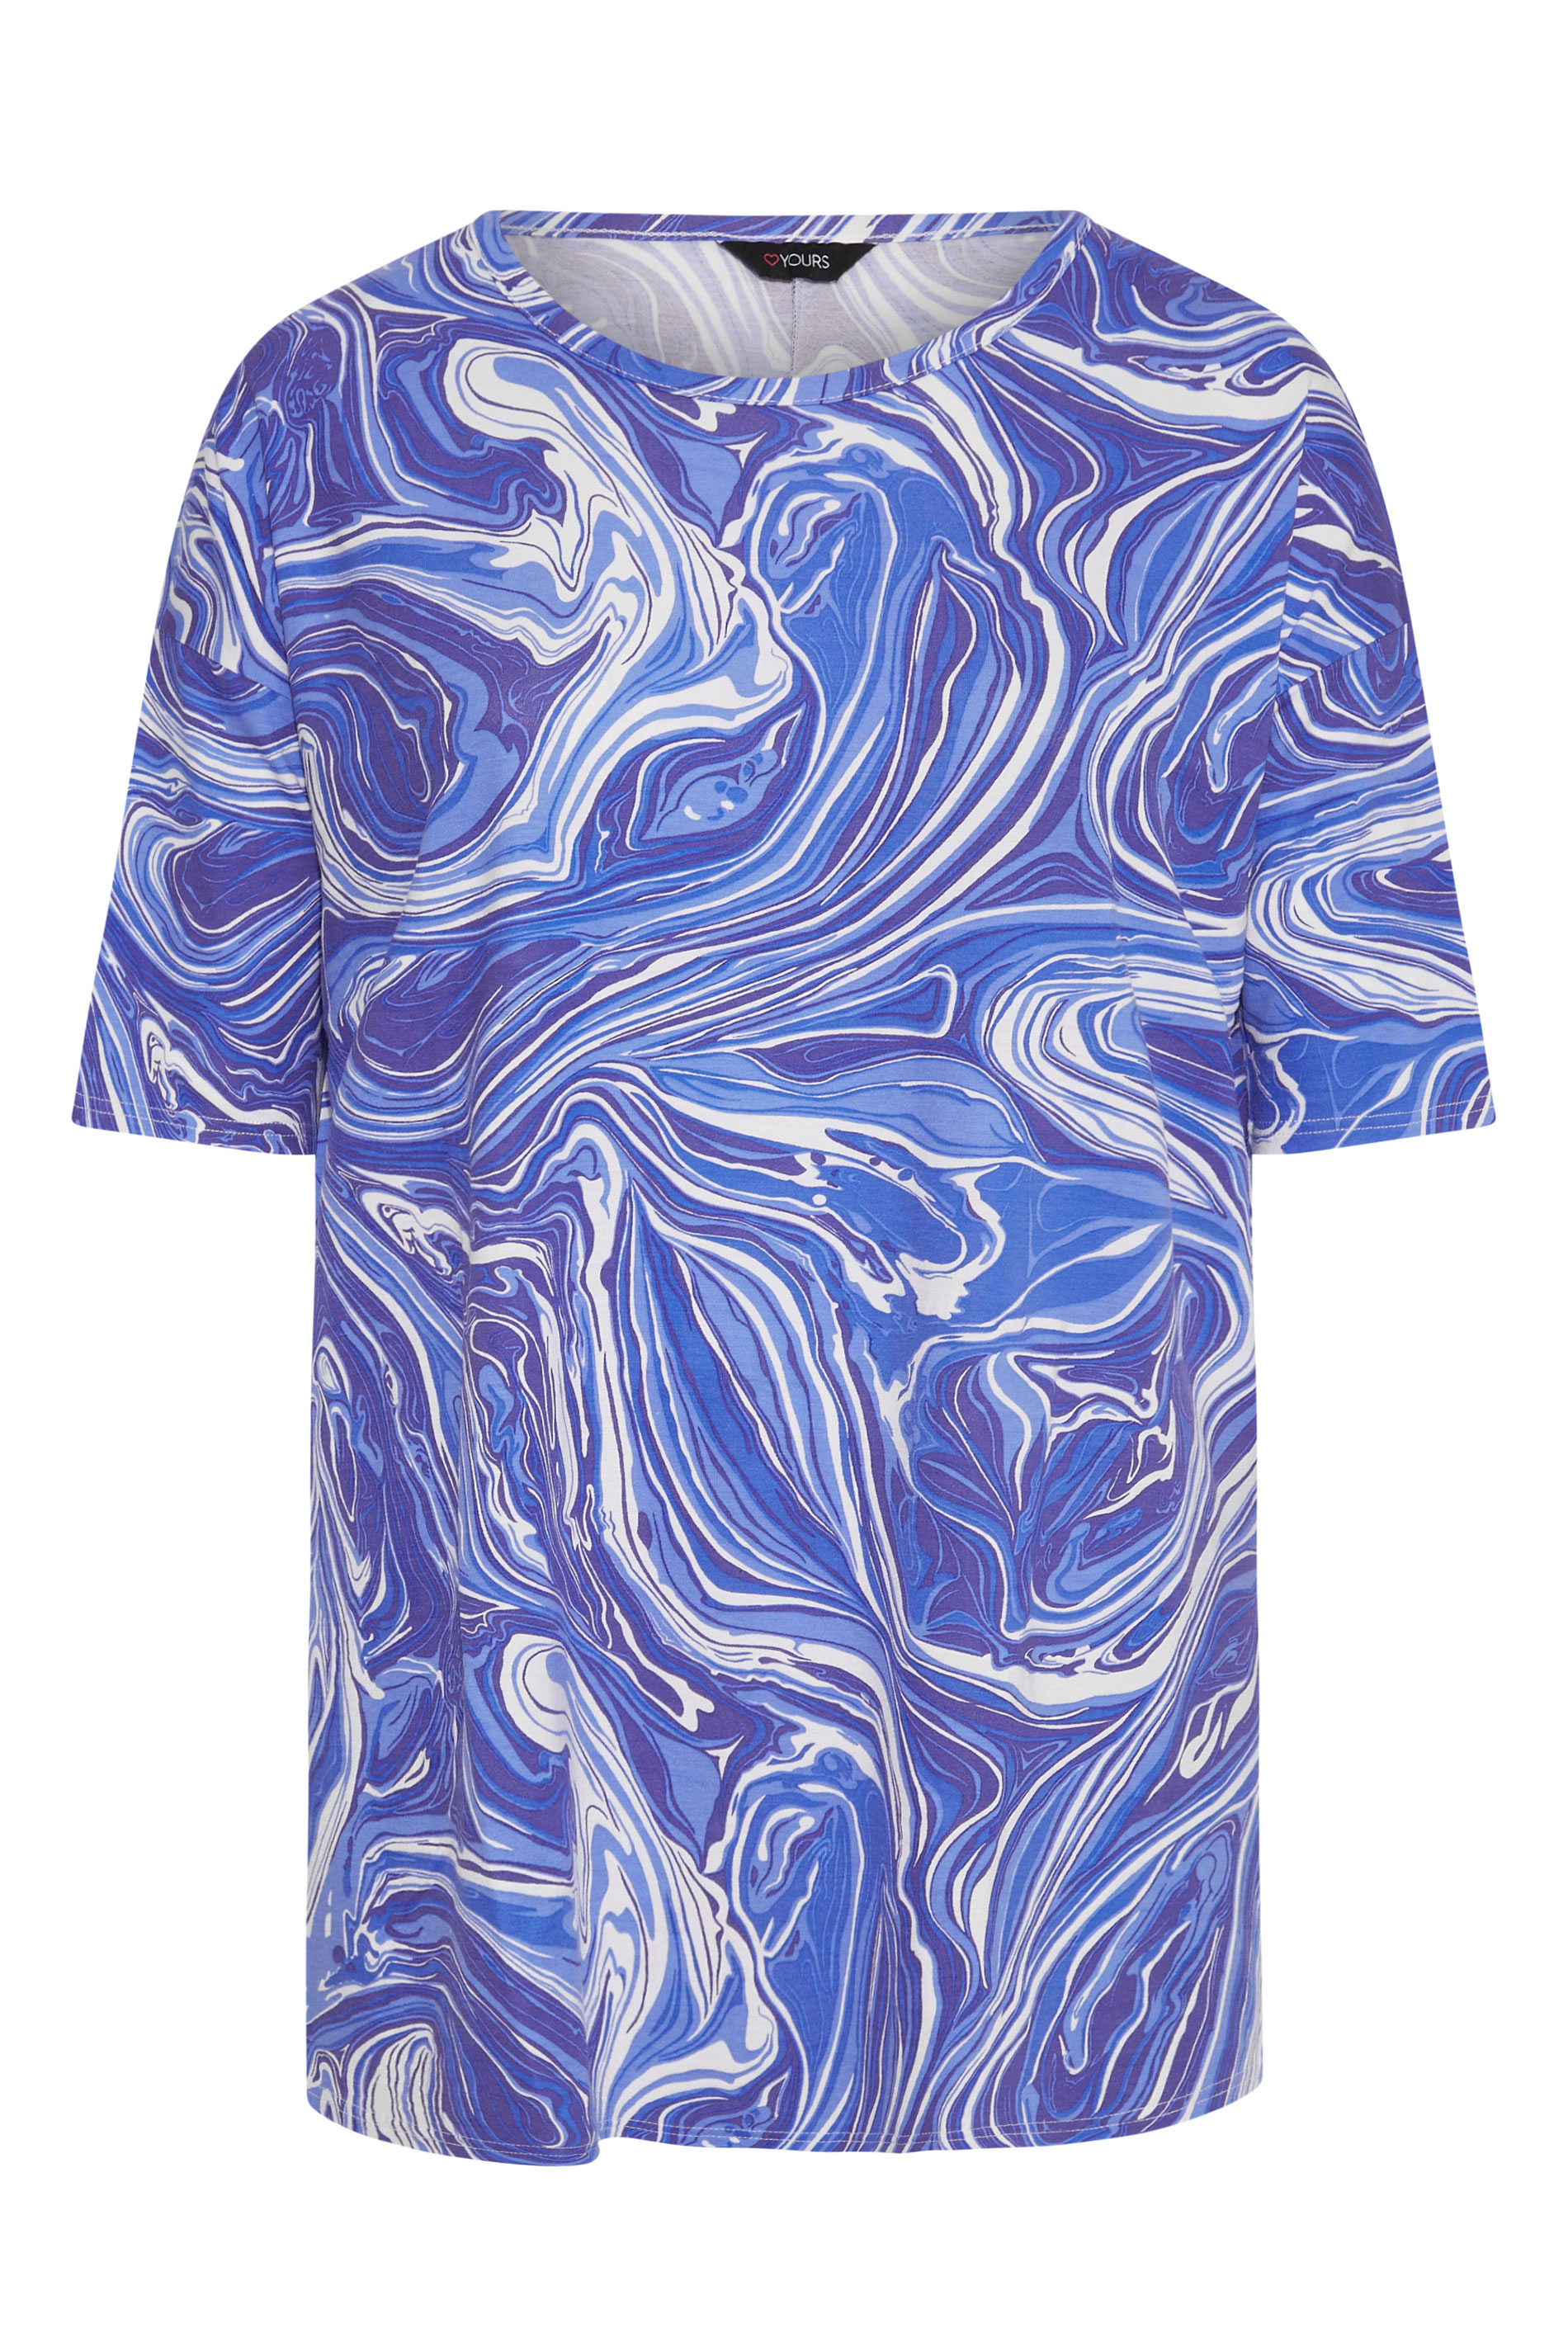 Grande taille  Tops Grande taille  T-Shirts | T-Shirt Bleu Roi Design Marbré Oversize - MW75167